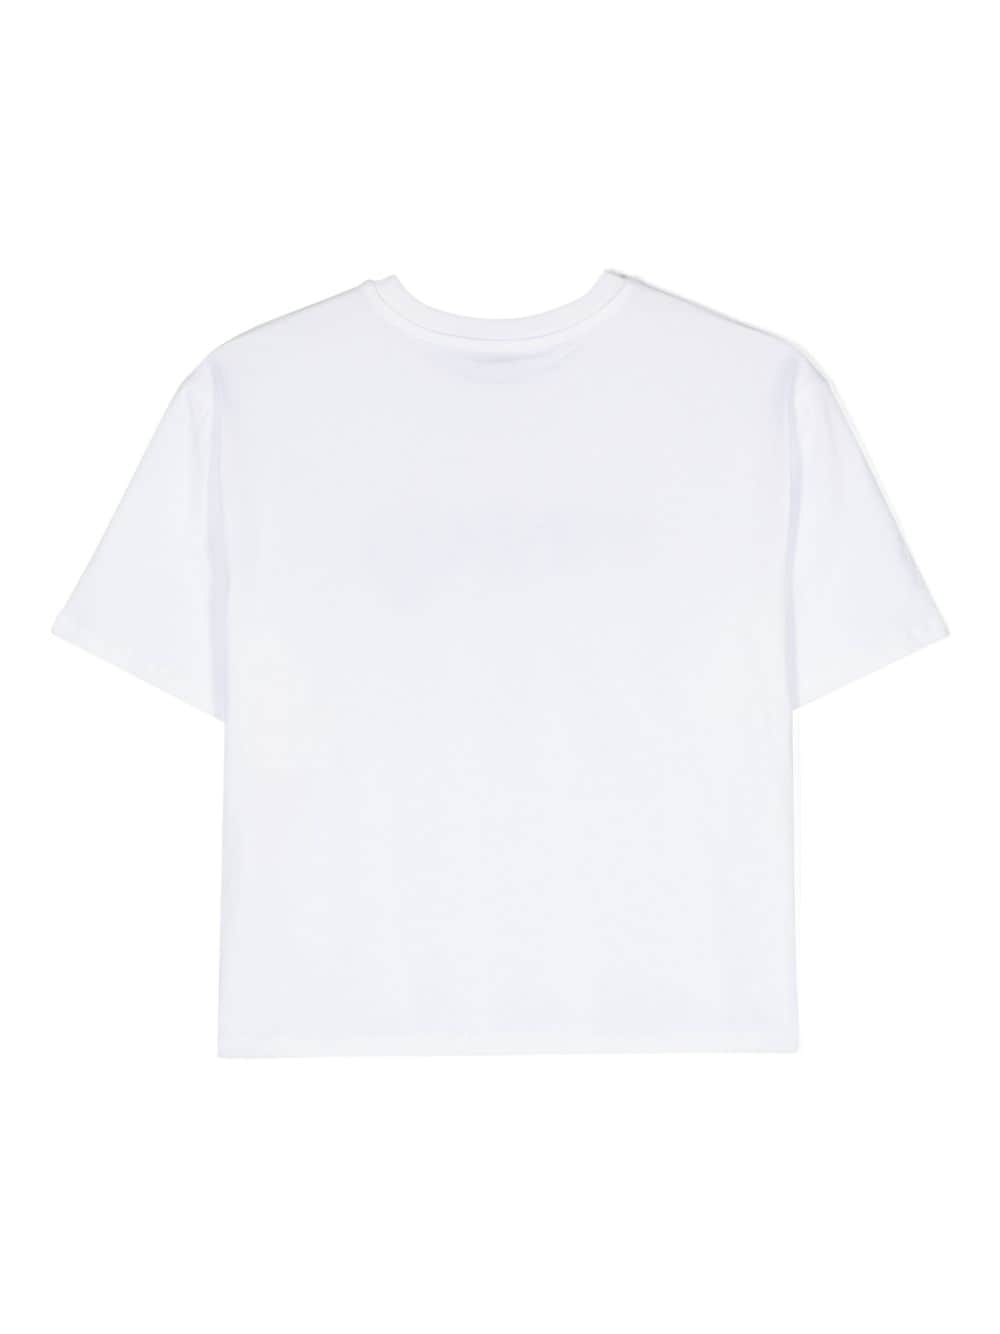 T-shirt bianca per bambina con logo nero